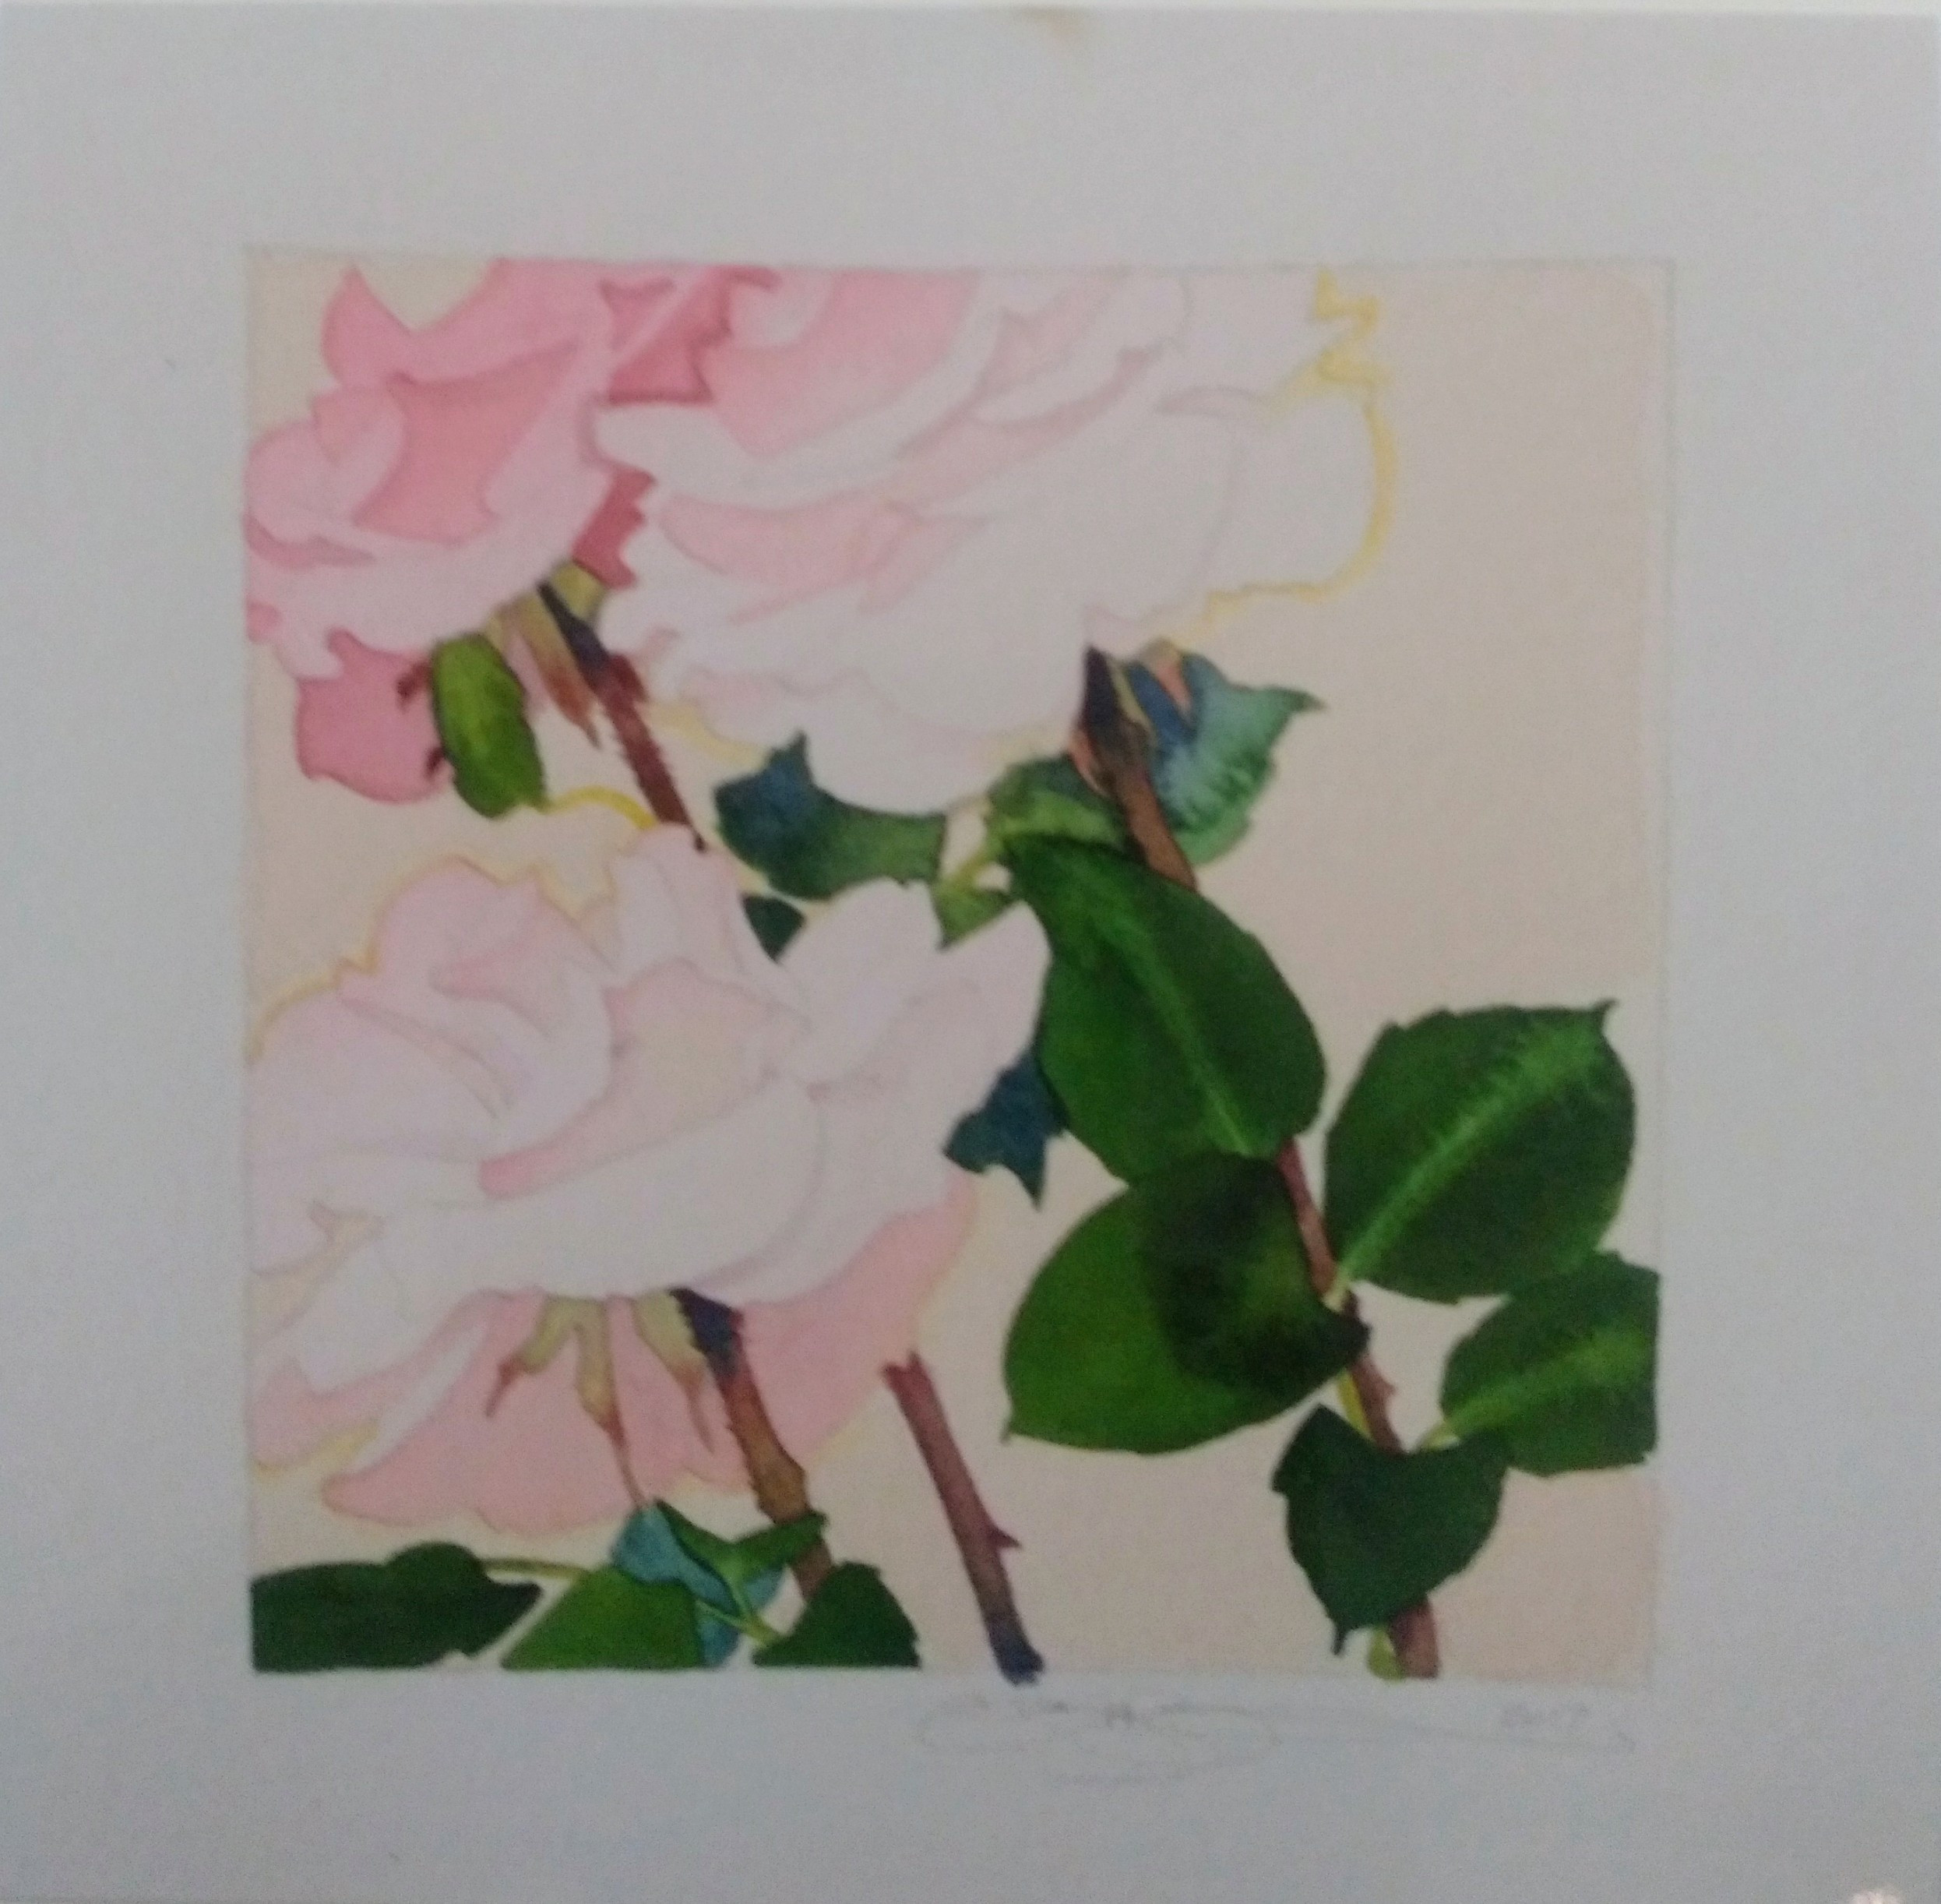 Pink rose study, 2018